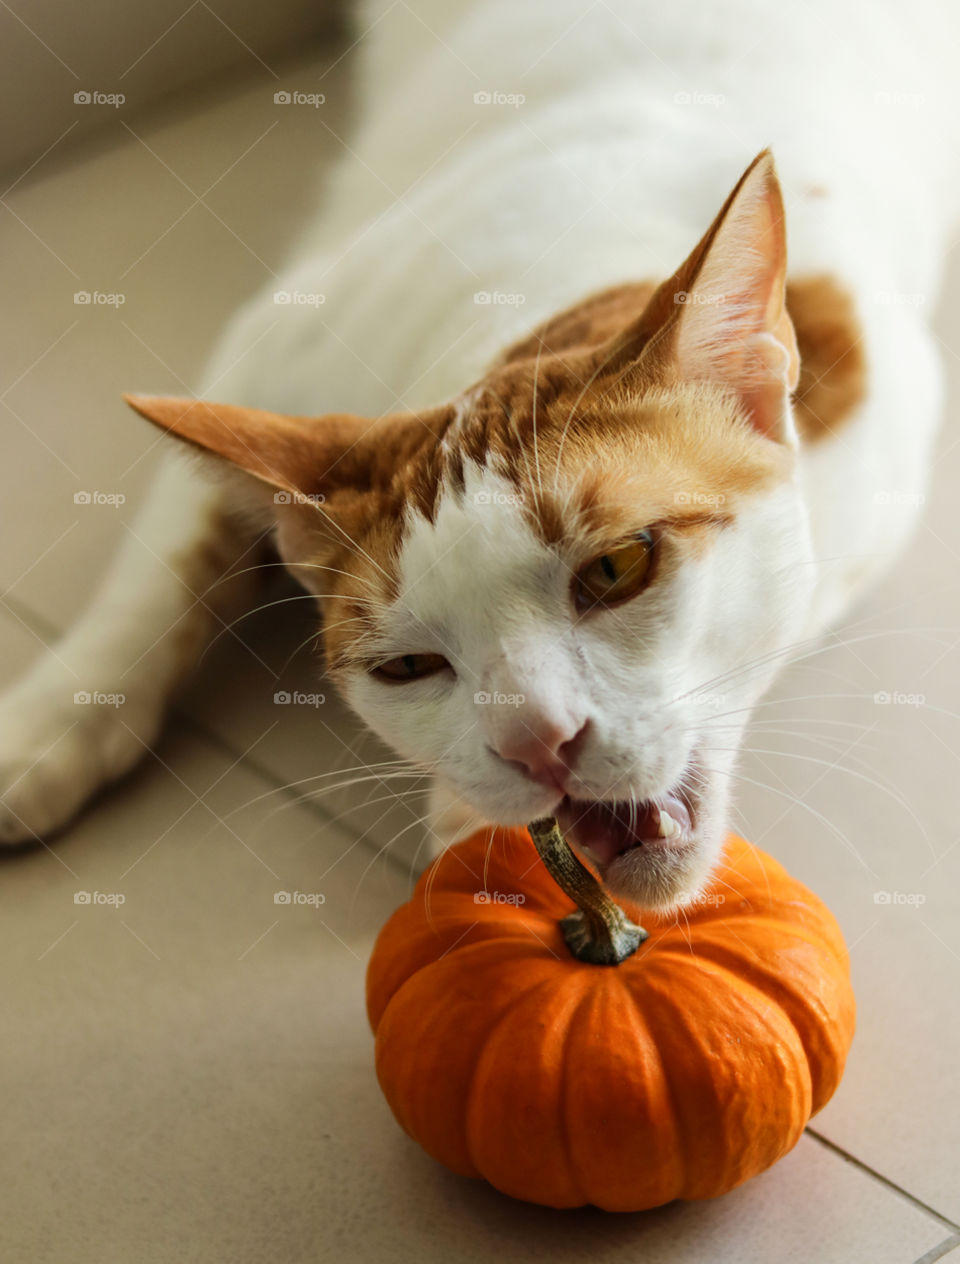 Cat and a Pumpkin